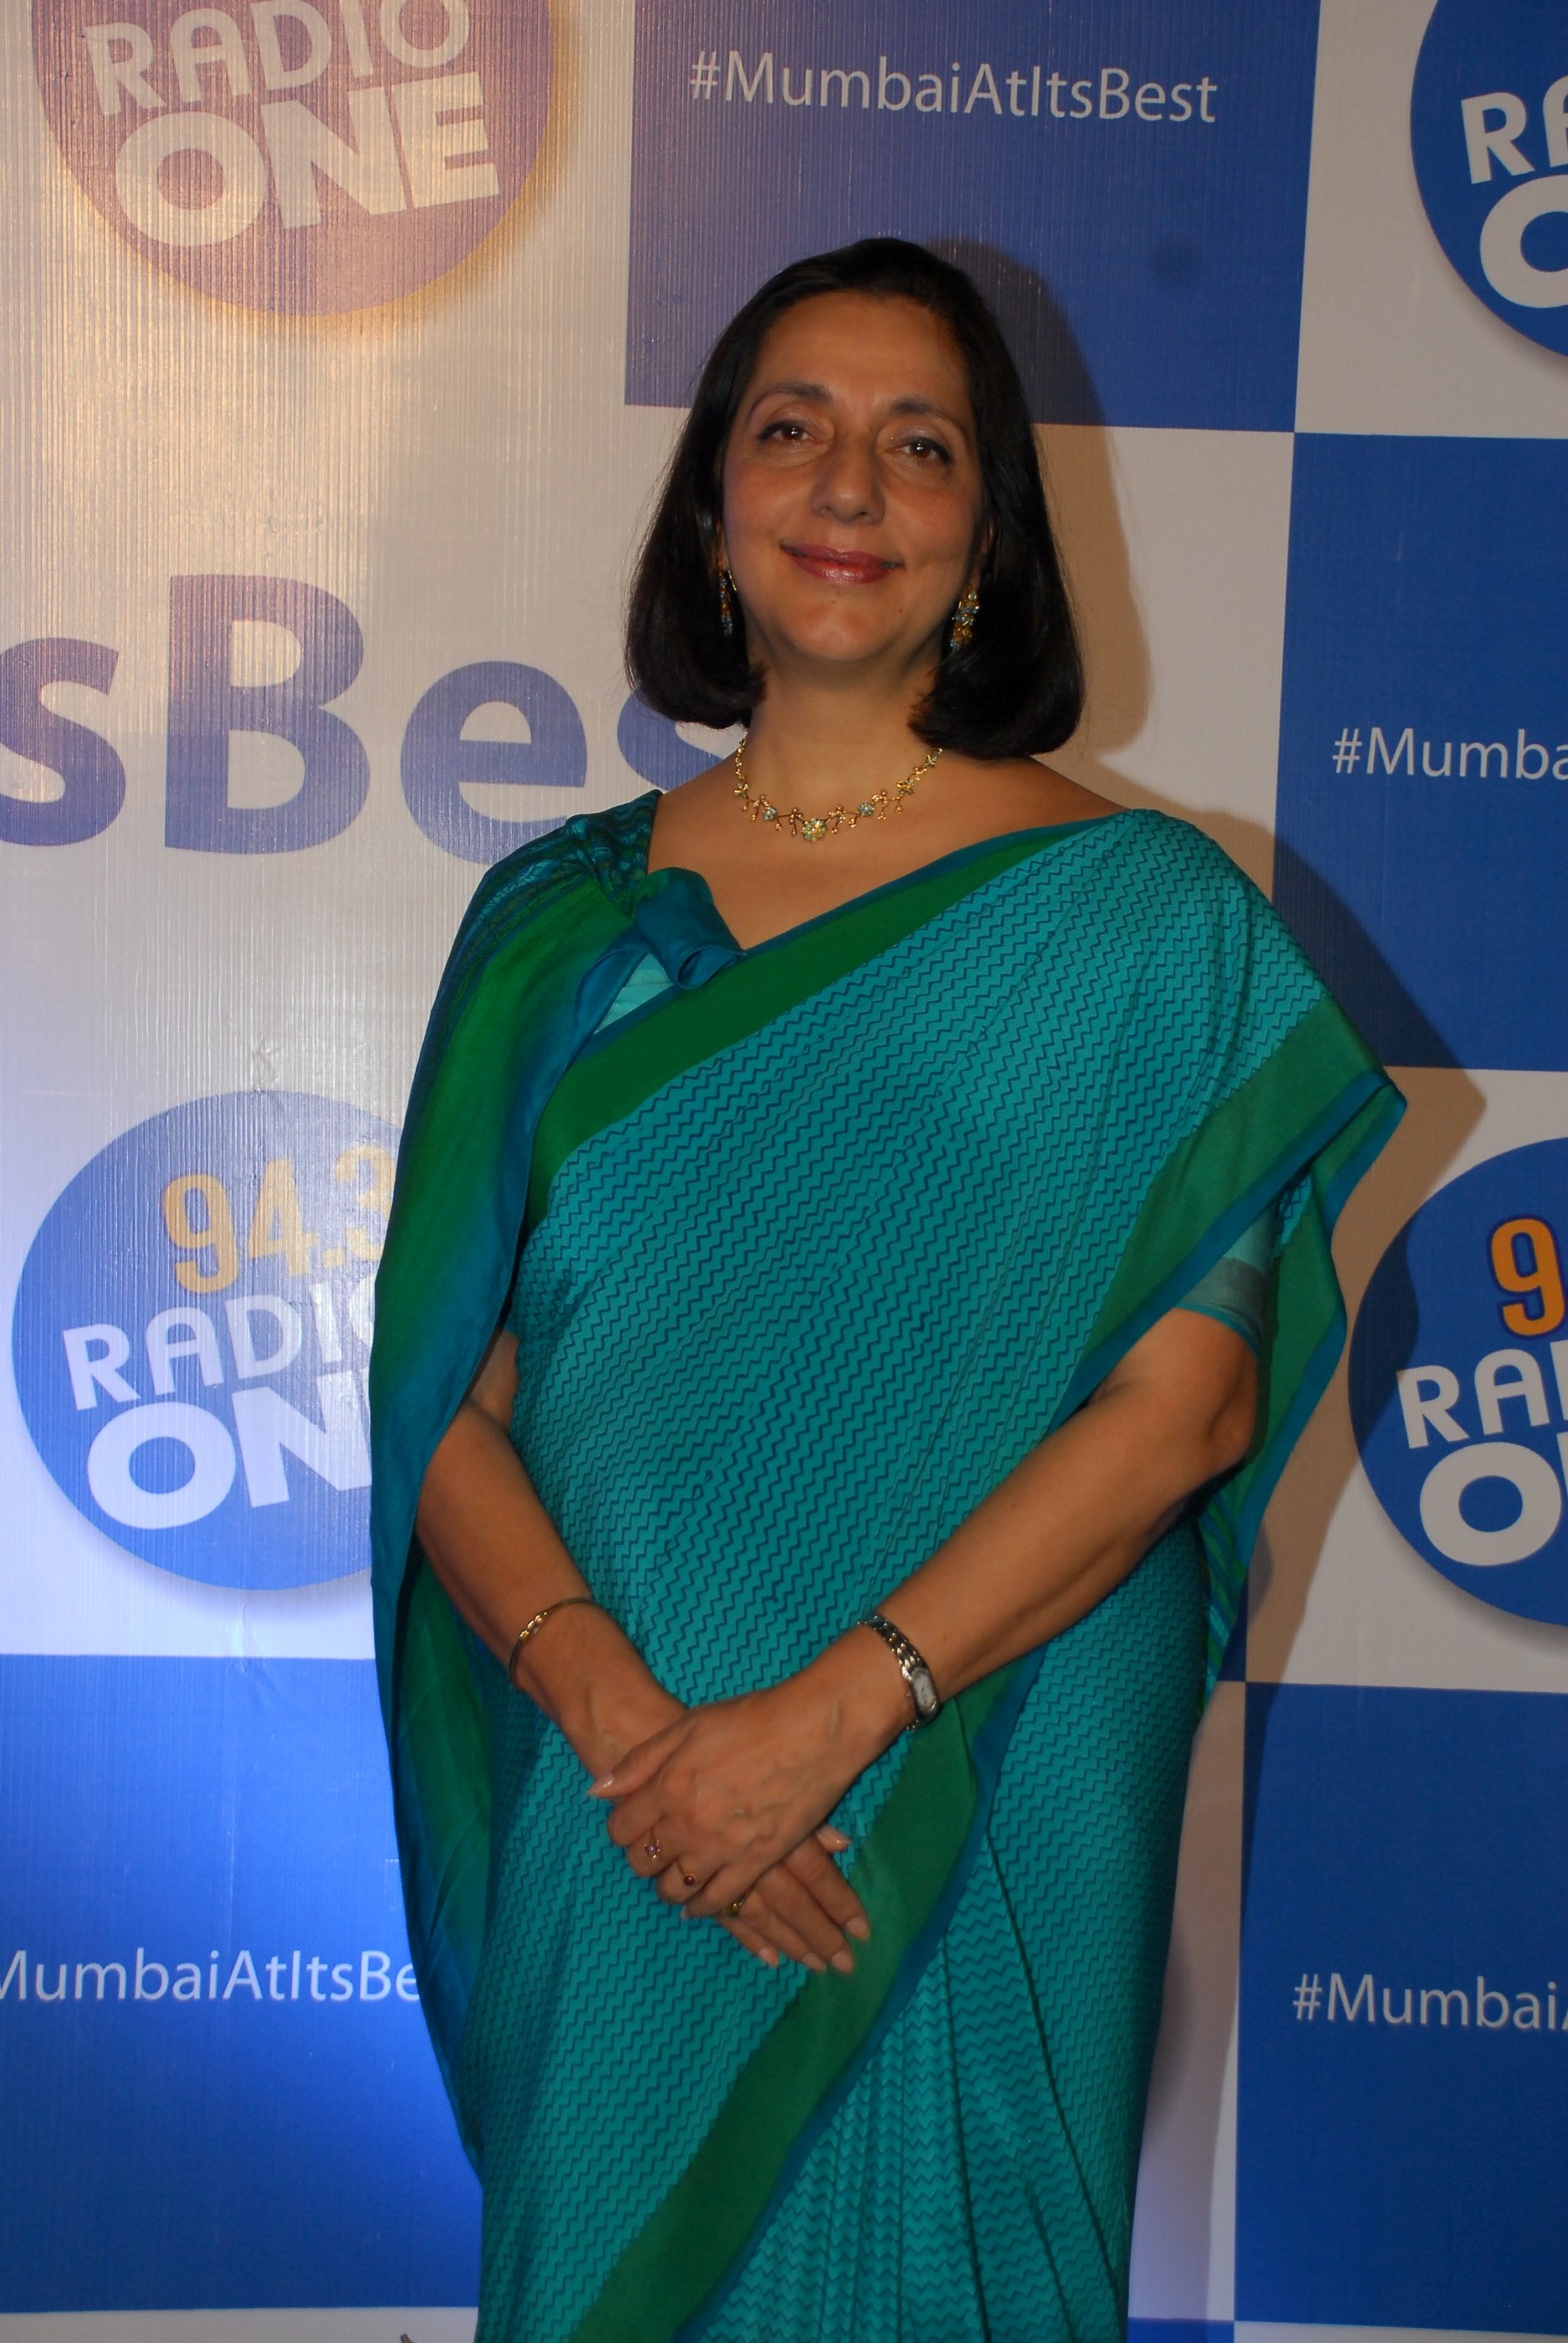 Stars at Radio One CSR initiative Mumbai at Its Best Event